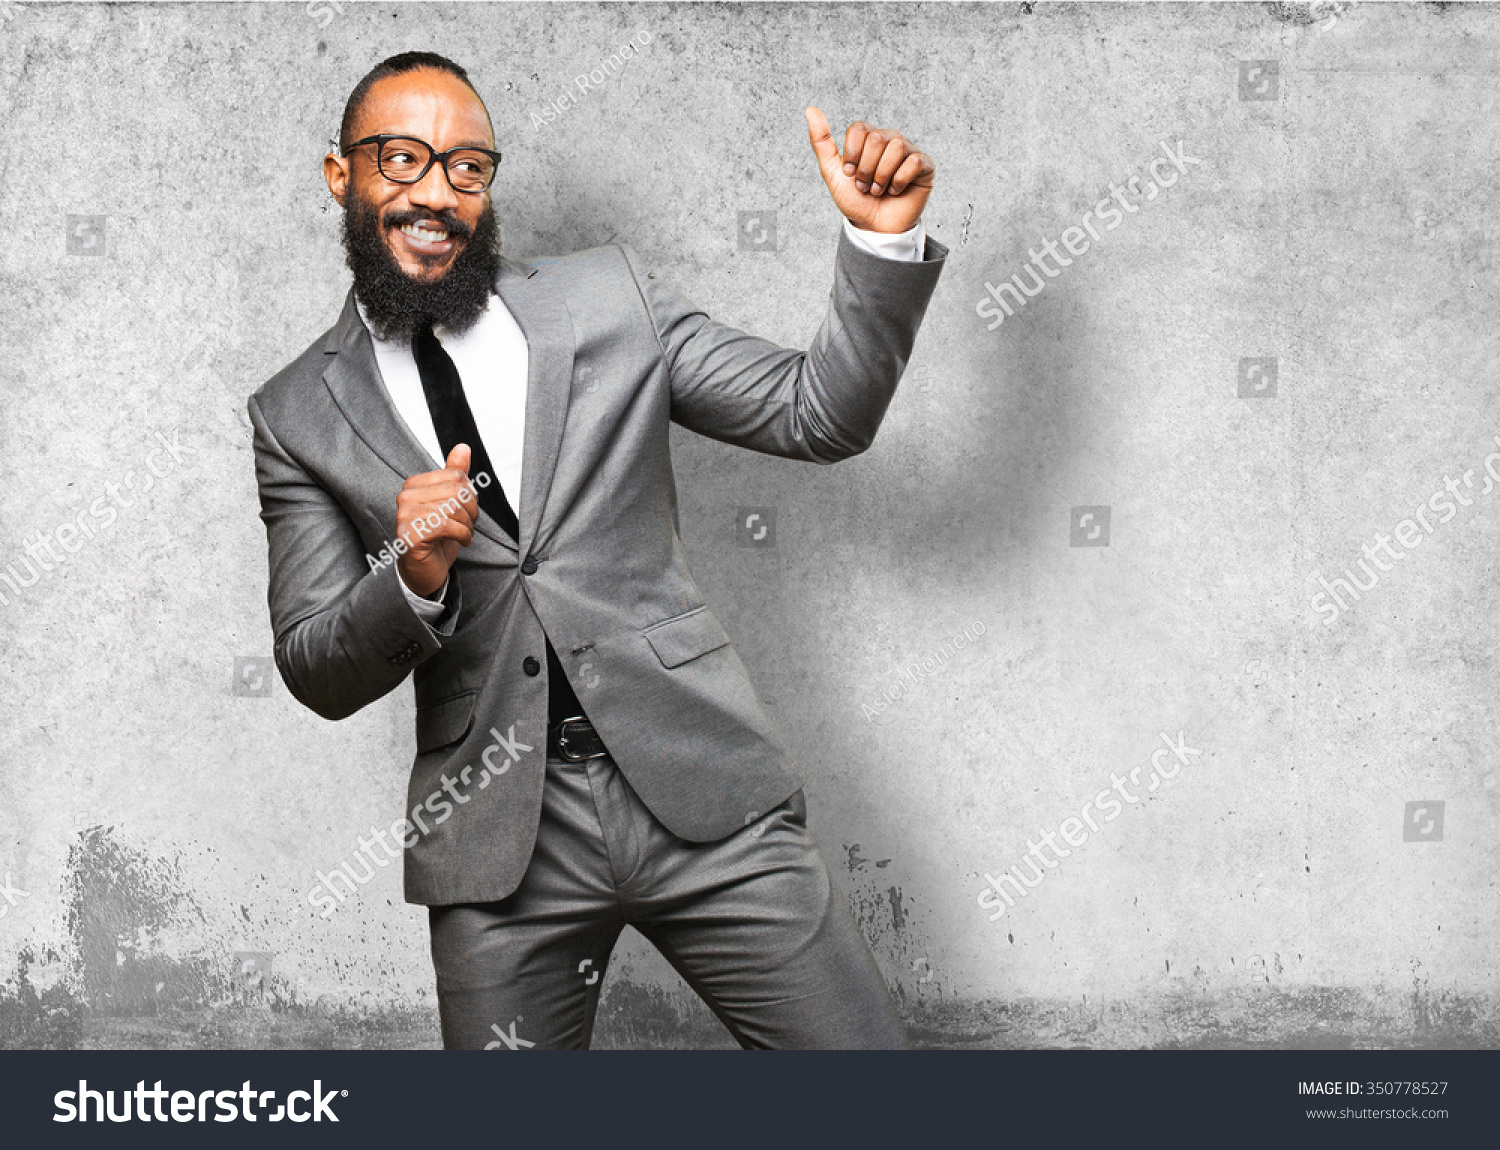 Business Black Man Dancing Stock Photo (Edit Now) 350778527